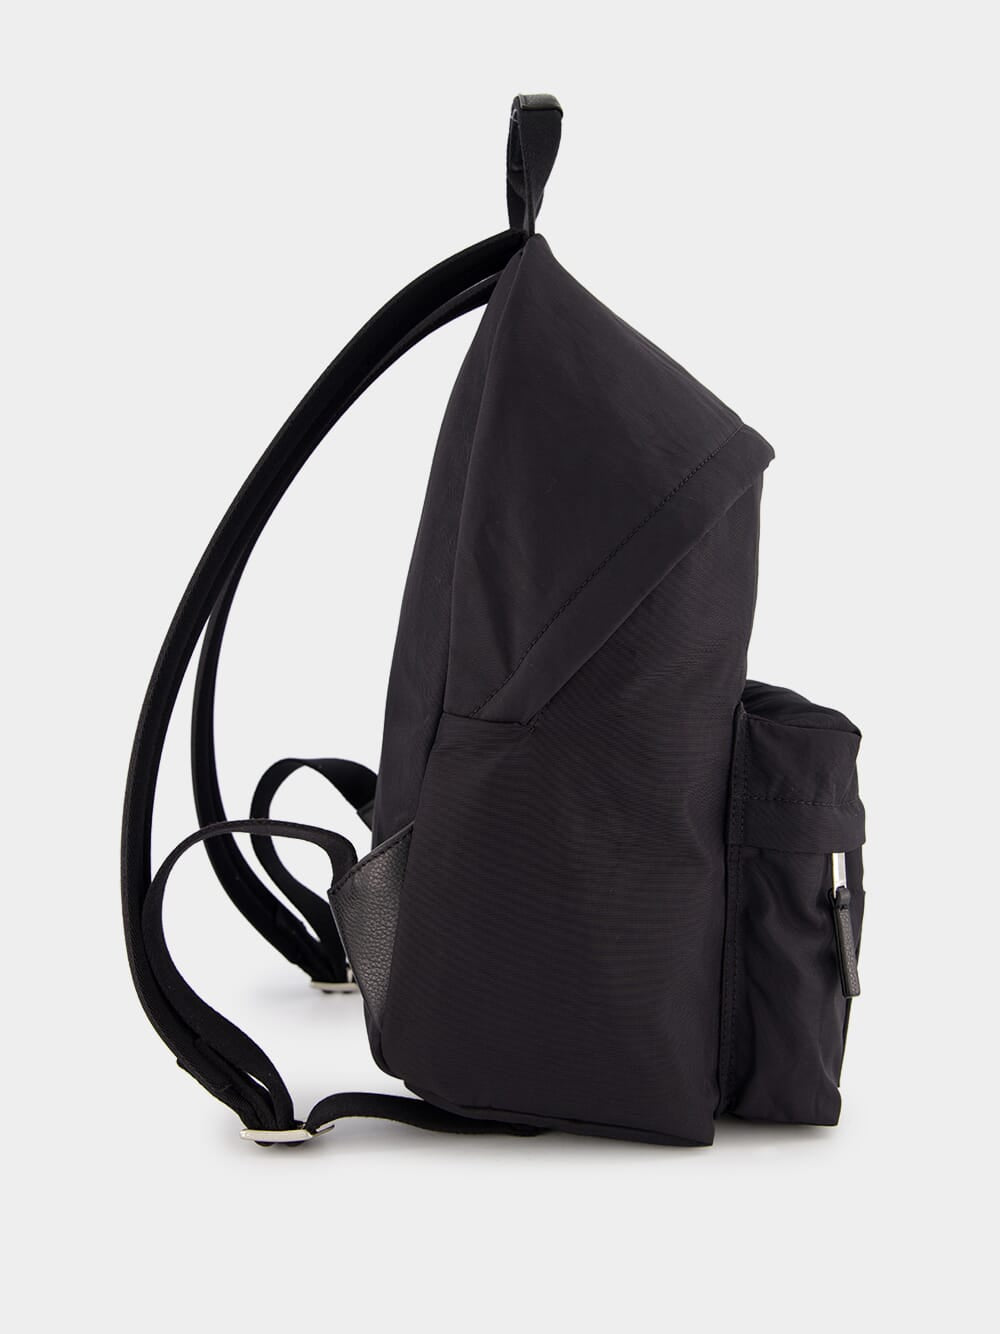 Black Textured Backpack